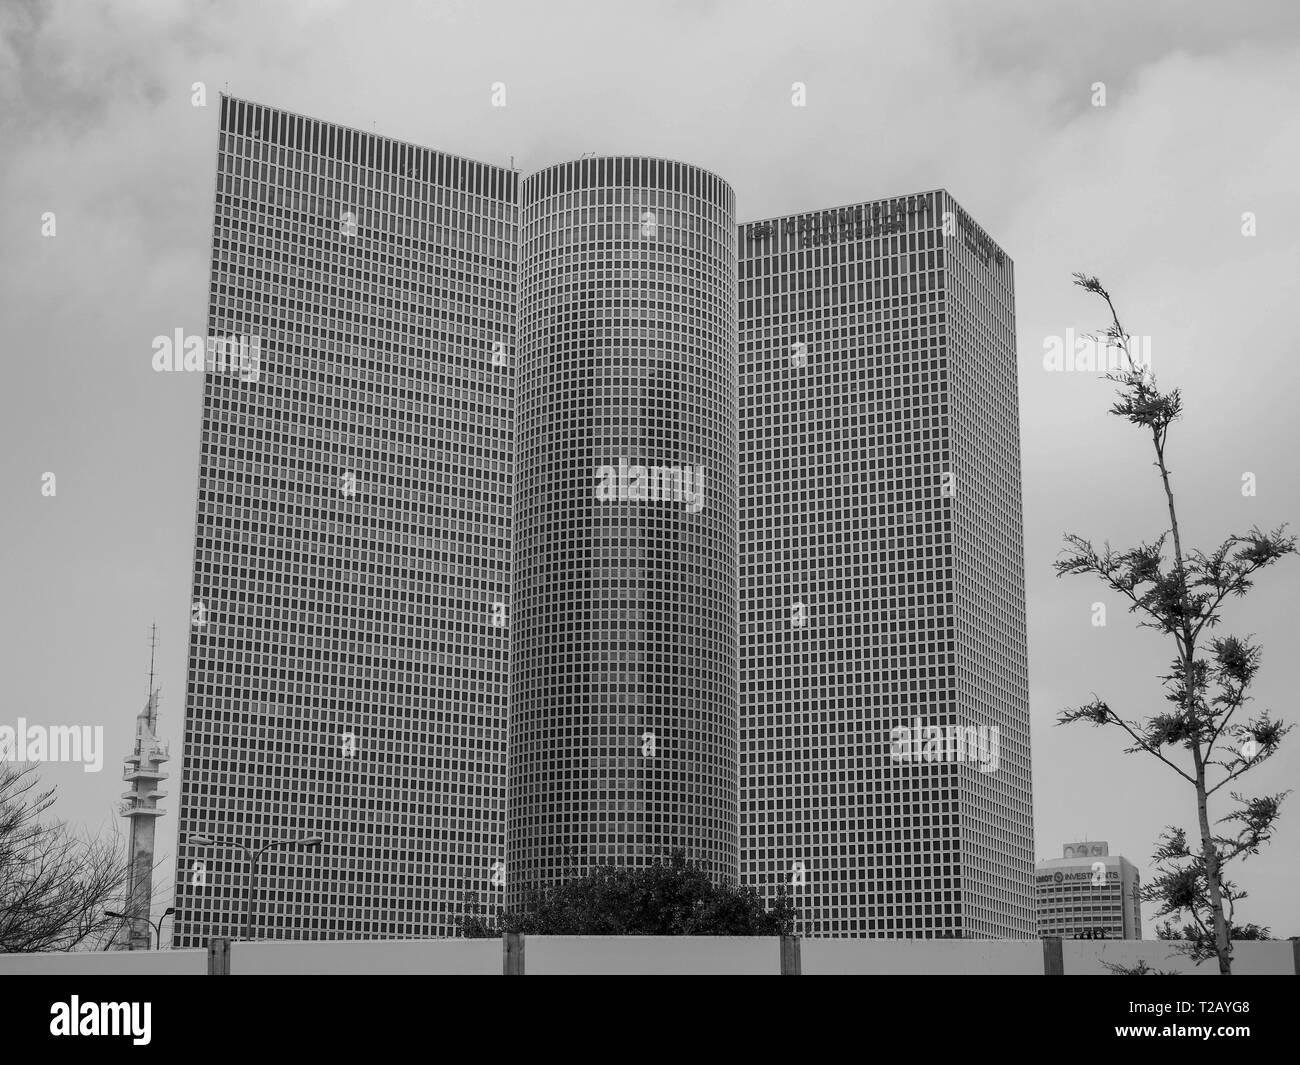 Azrieli towers. Moderne, Glas, hohe Gebäude in Tel Aviv, Israel Stockfoto